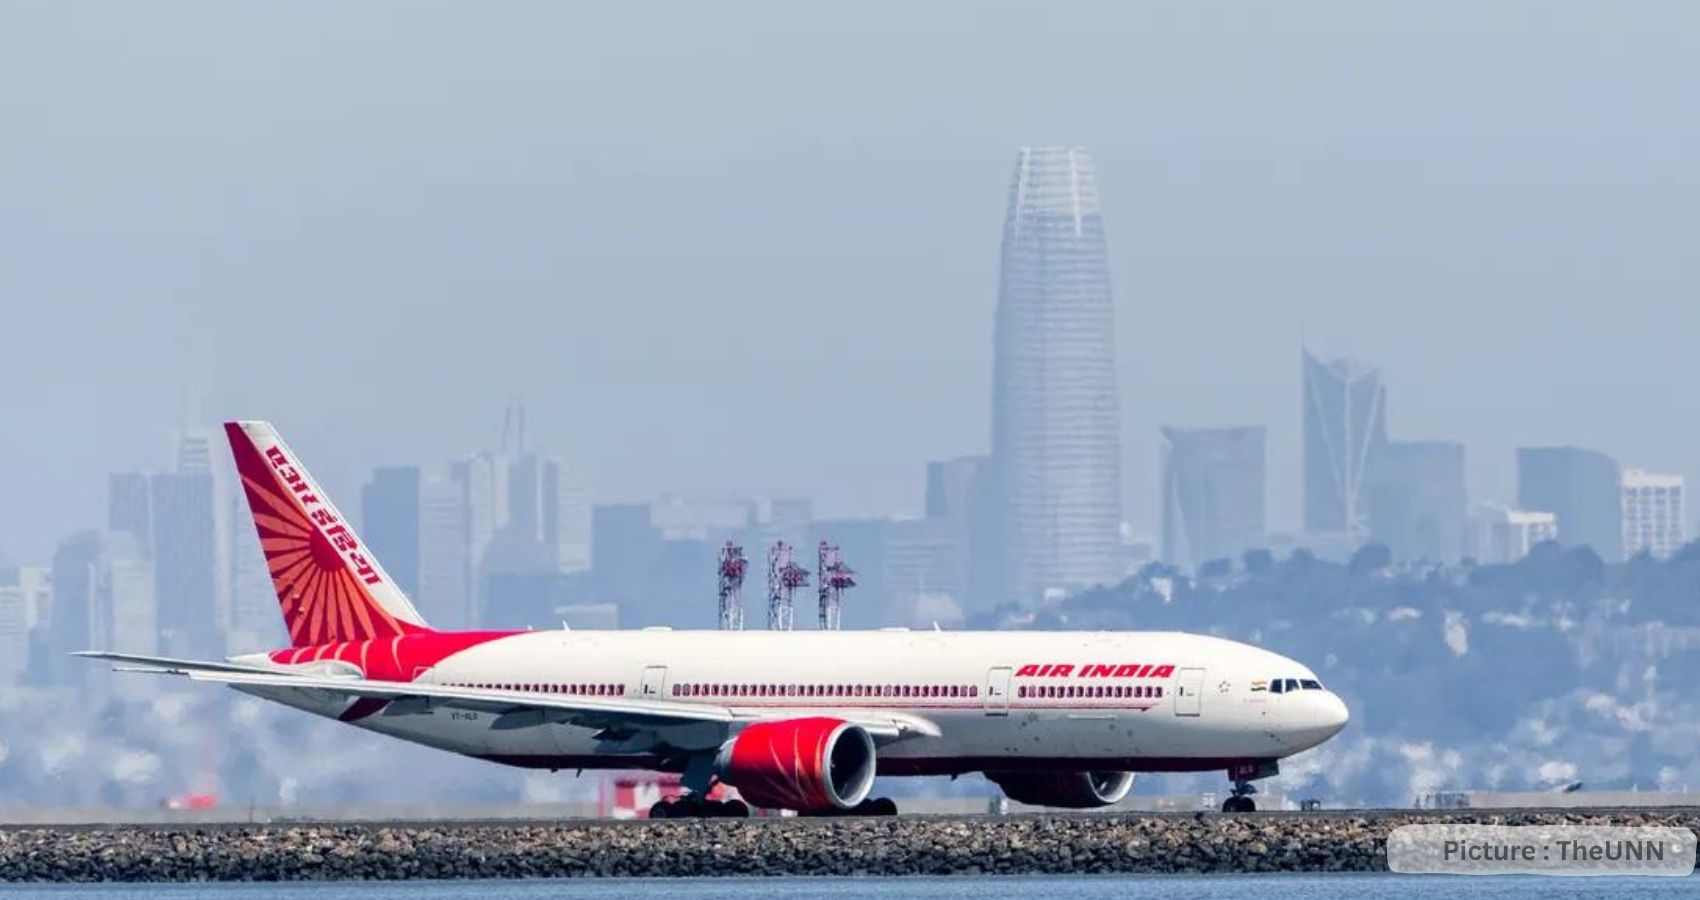 Air India’s Direct Flight Between Mumbai And San Francisco Begins